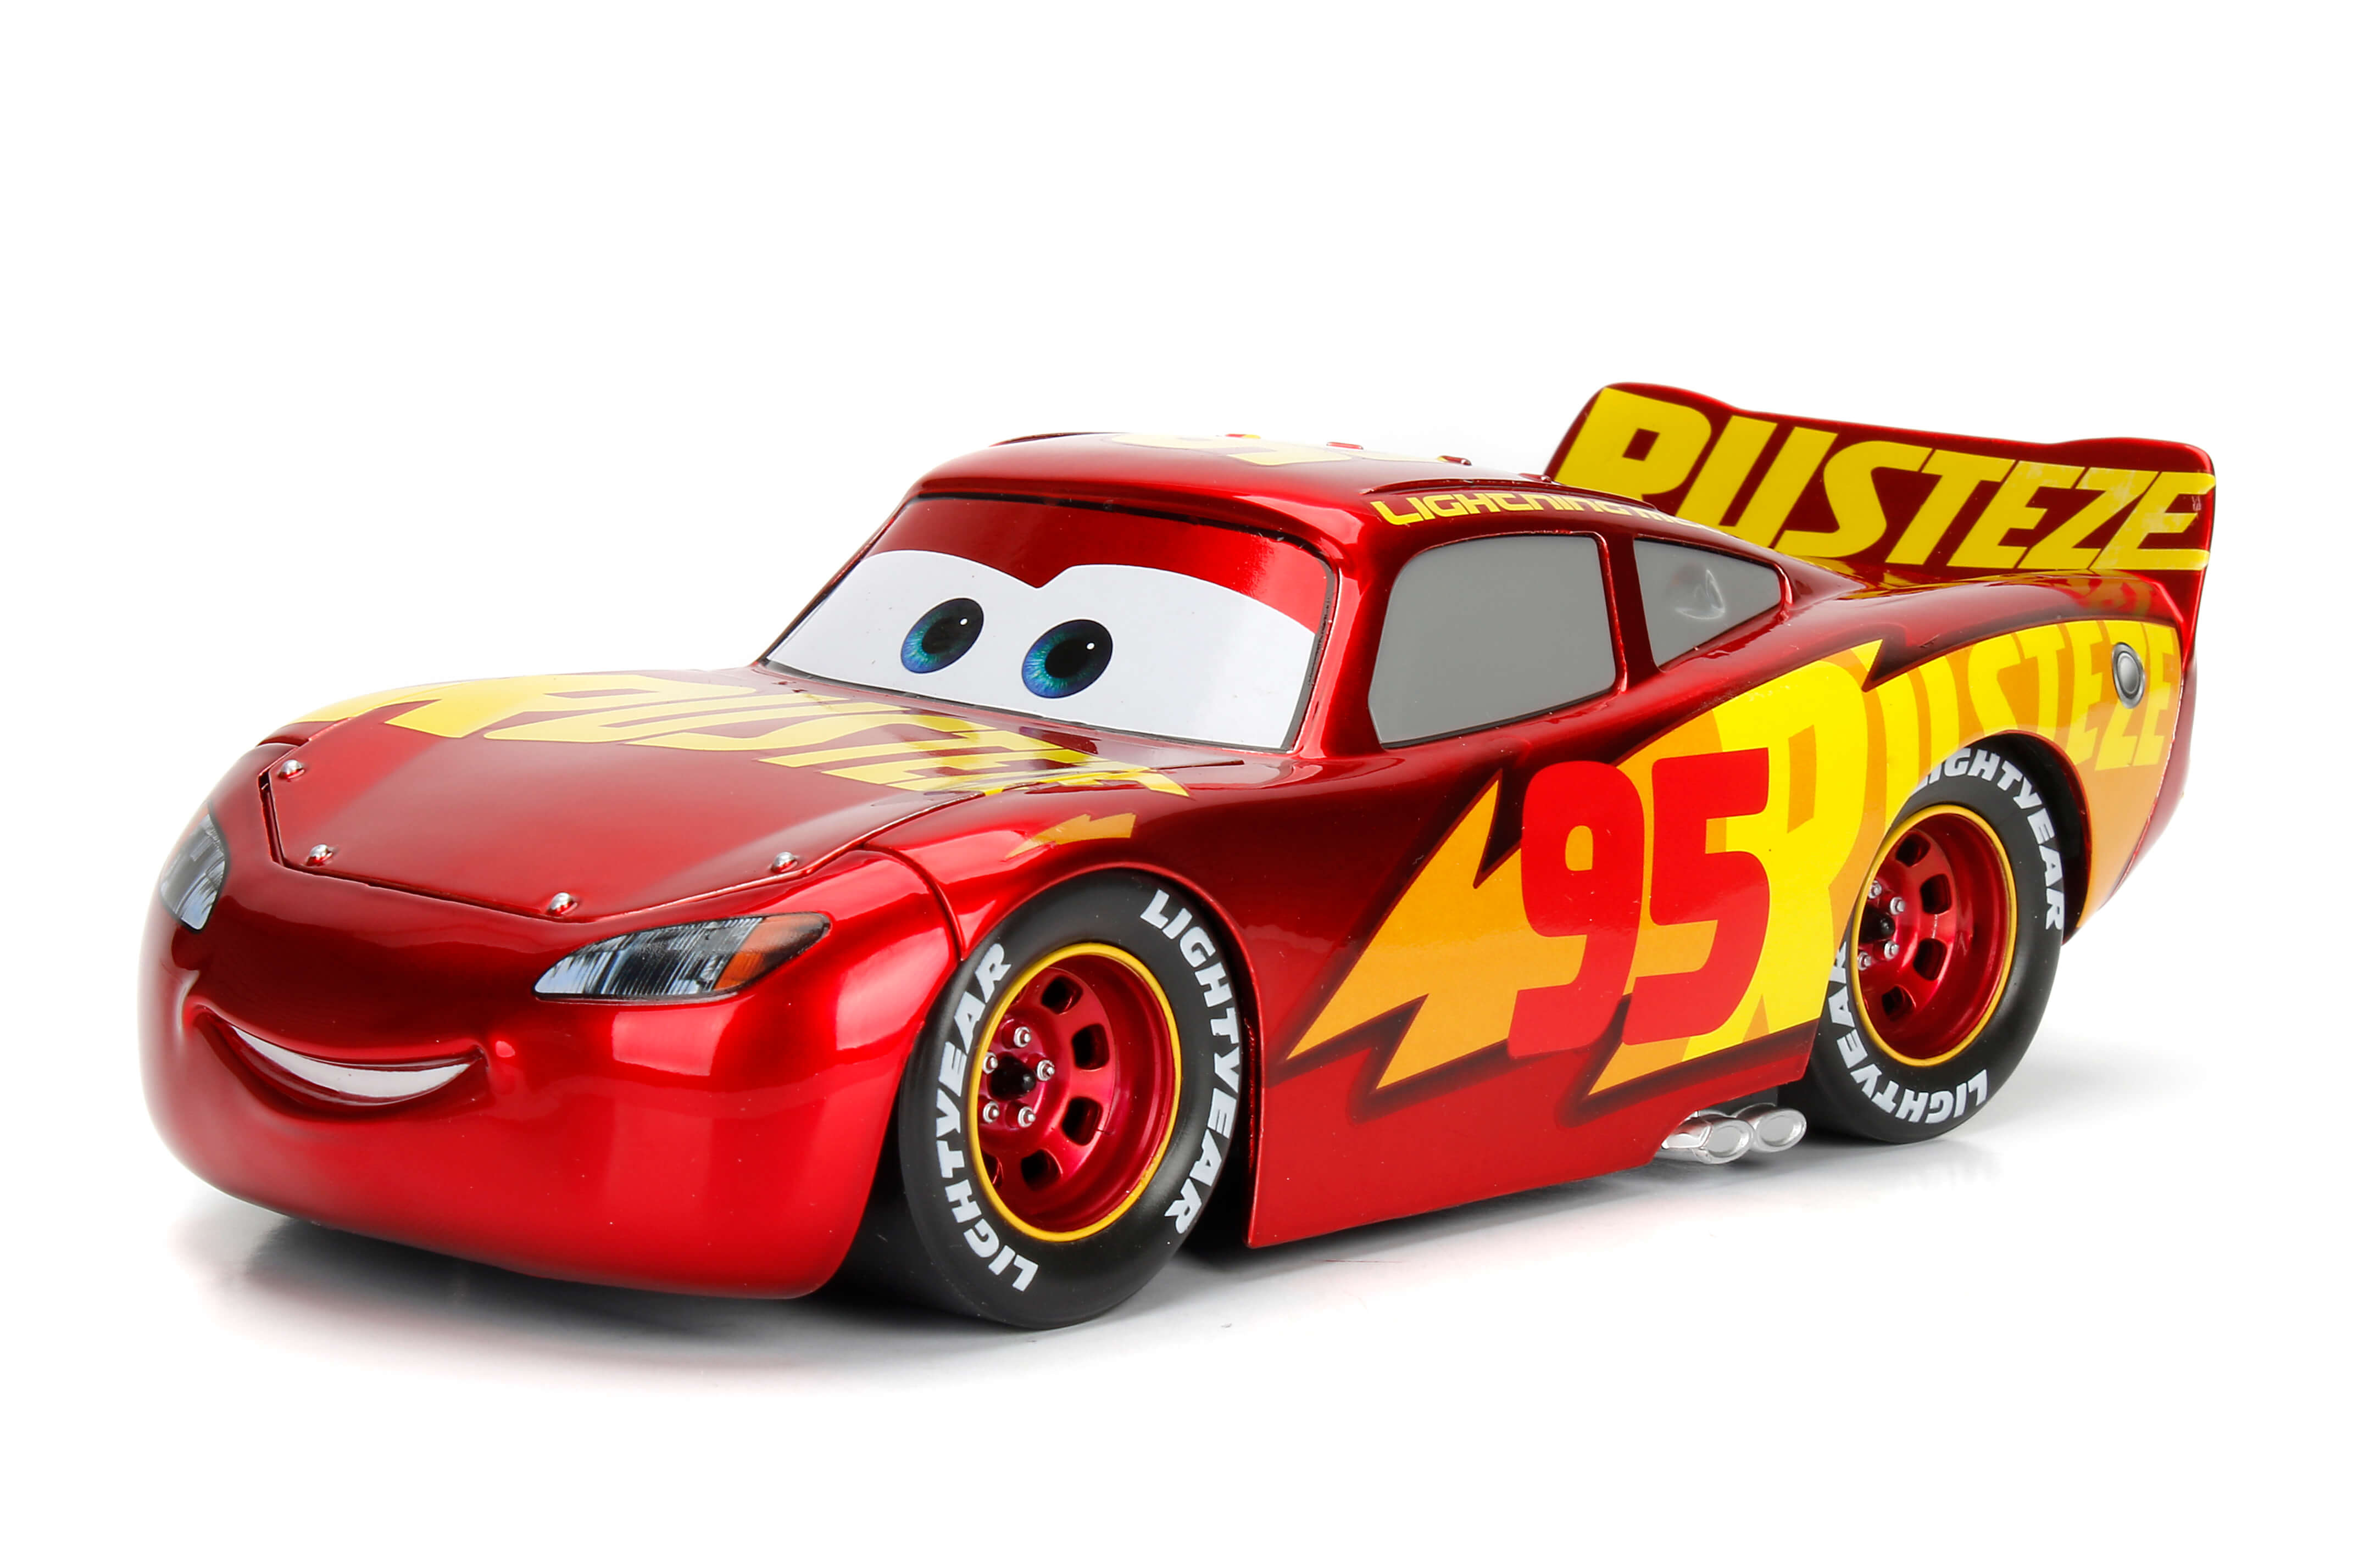 Disney Pixar Cars Cruisin' Lightning Mcqueen Diecast Vehicle : Target